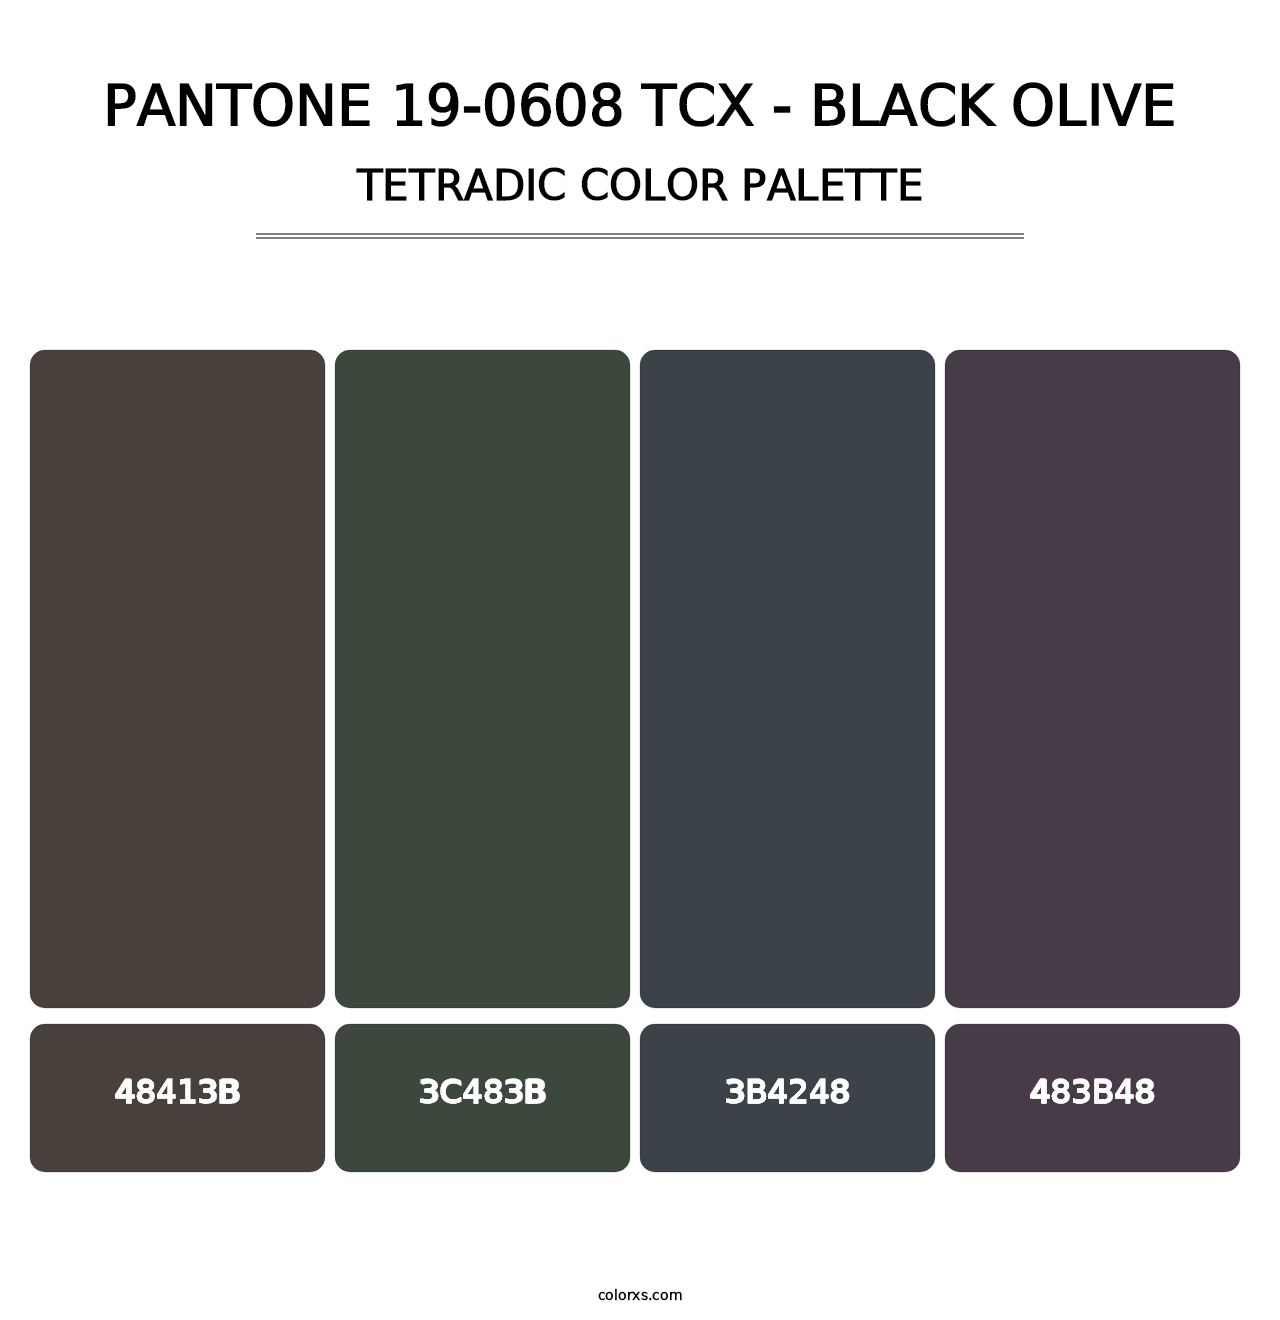 PANTONE 19-0608 TCX - Black Olive - Tetradic Color Palette